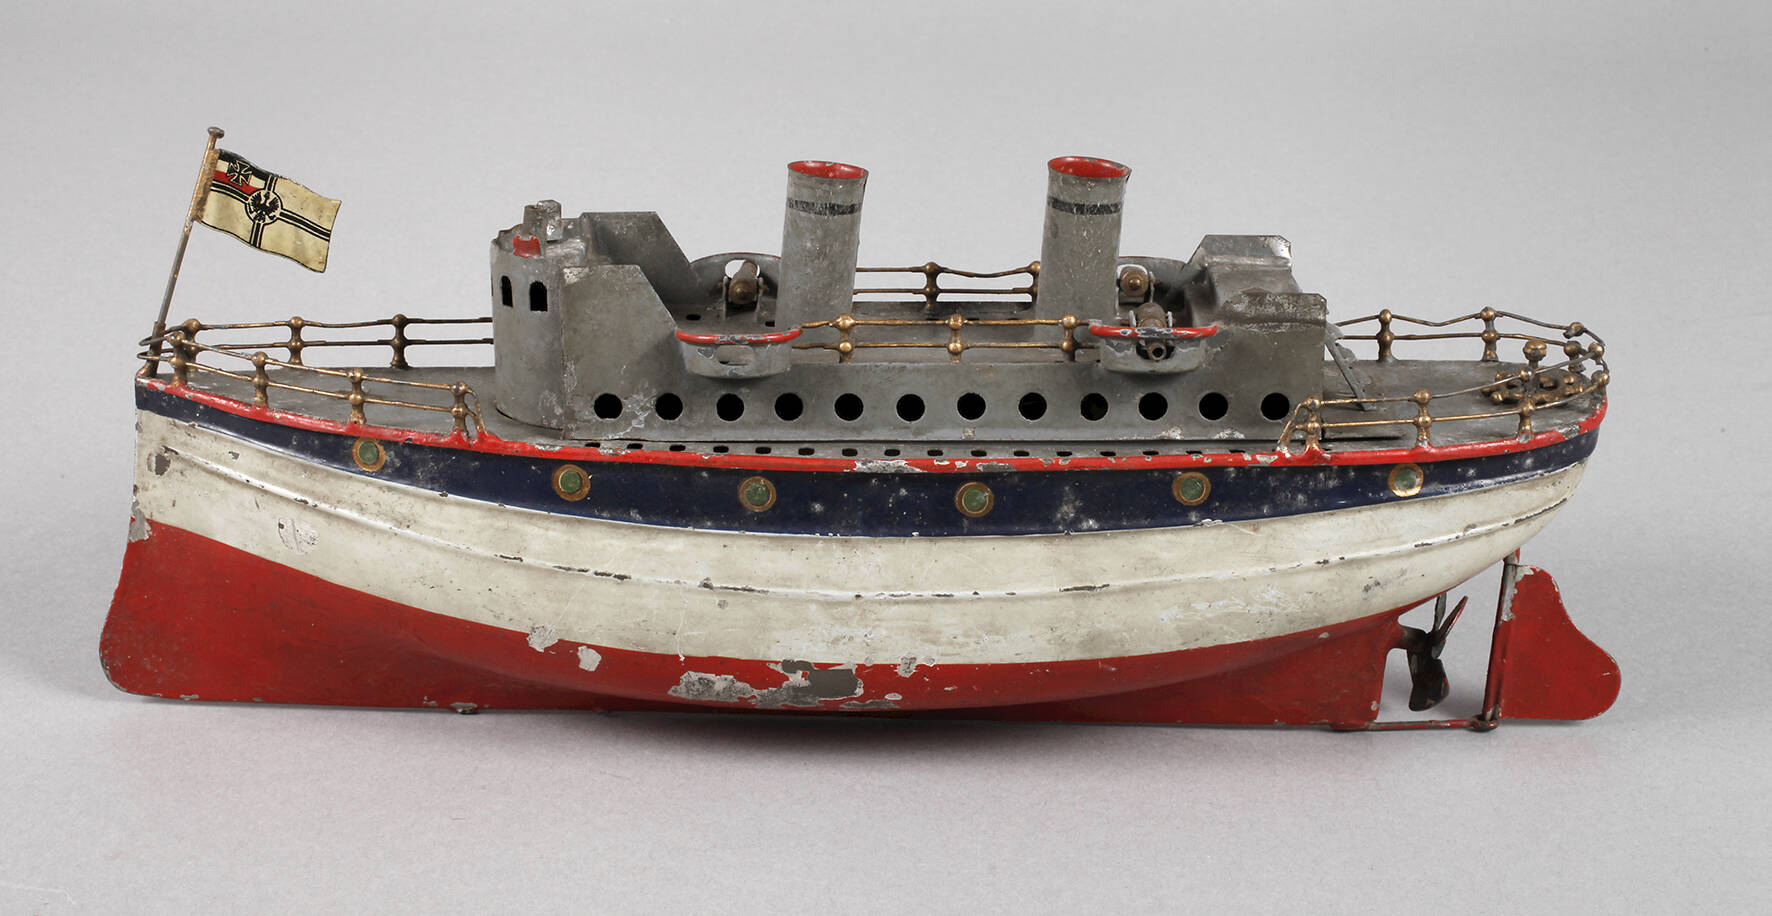 Bing Kanonenboot